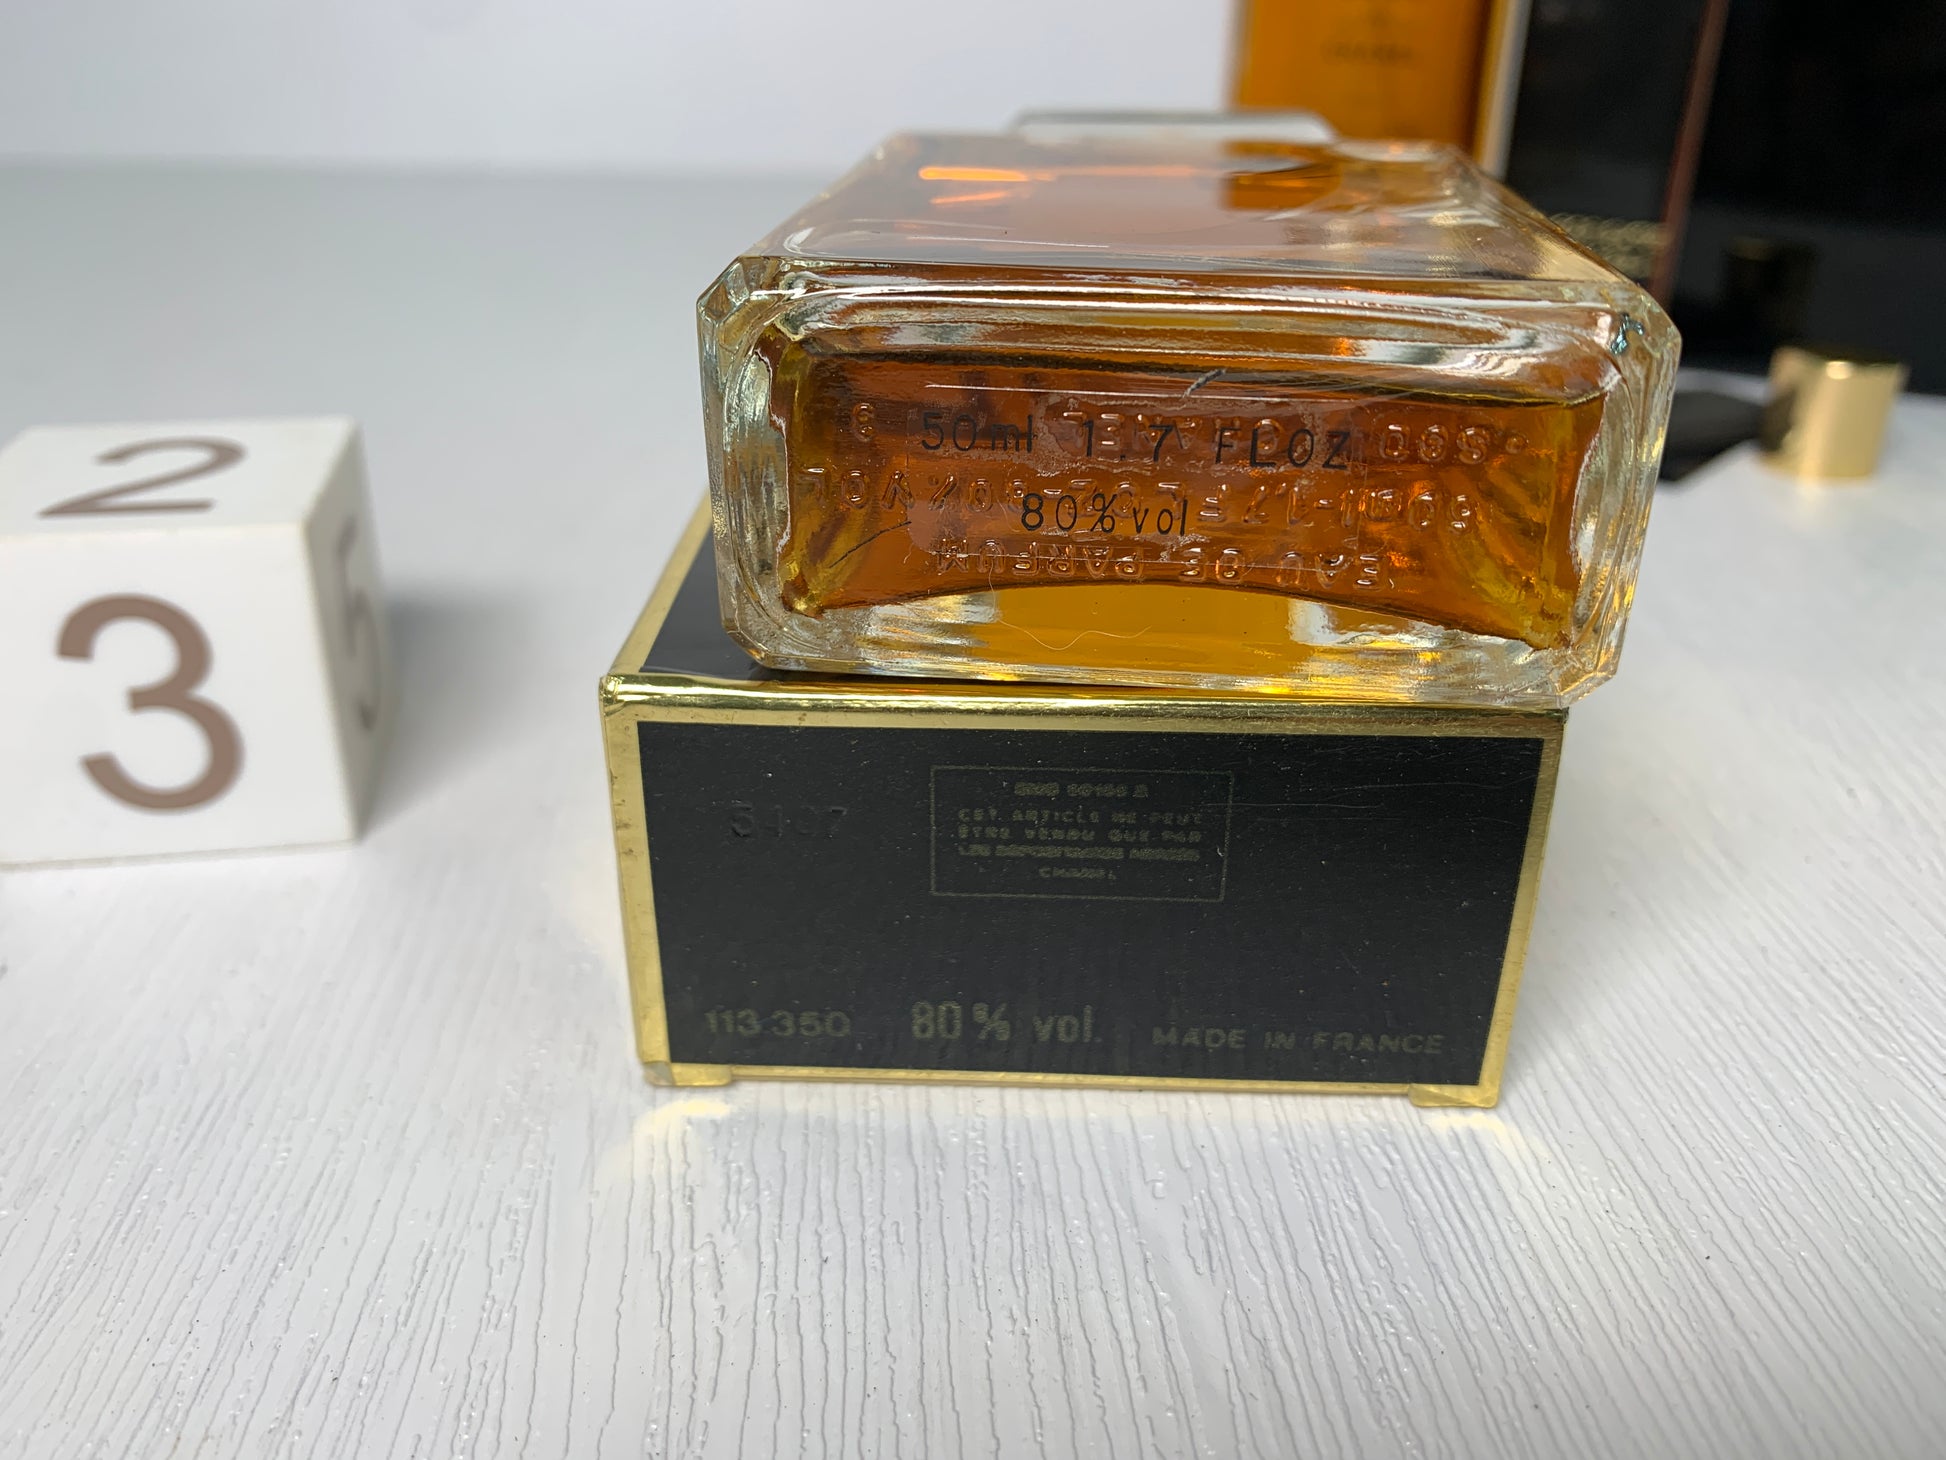 CHANEL (COCO) Eau de Parfum (50 ml)